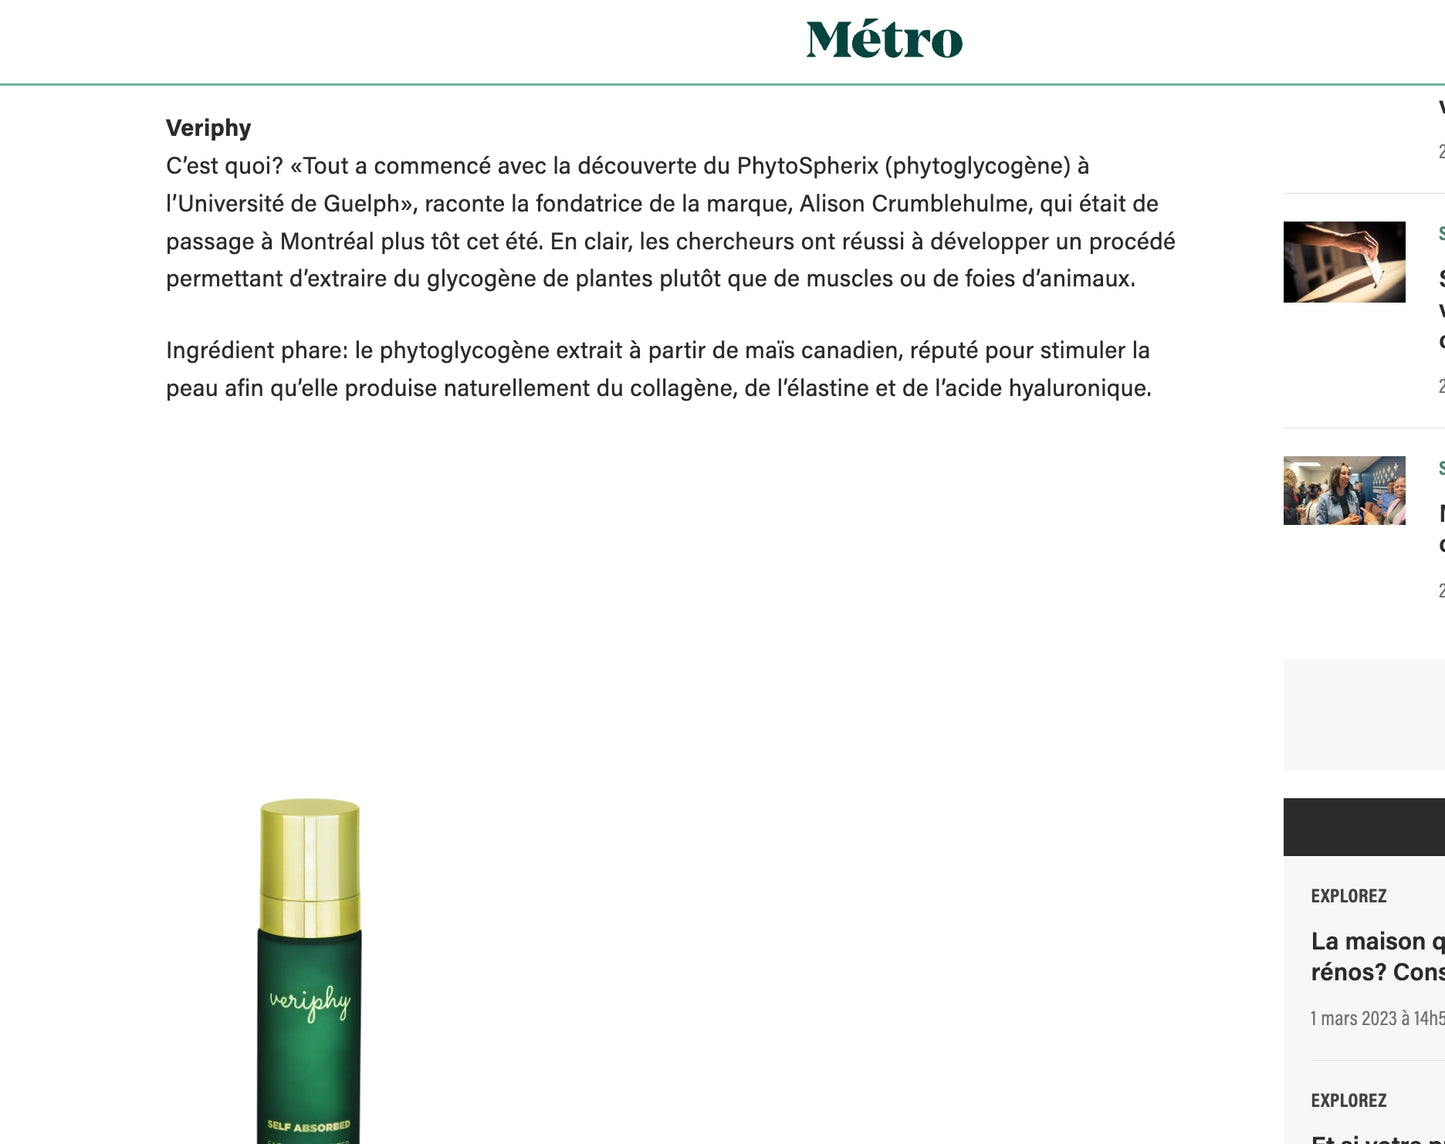 Veriphy Skincare featured in Metro Magazine